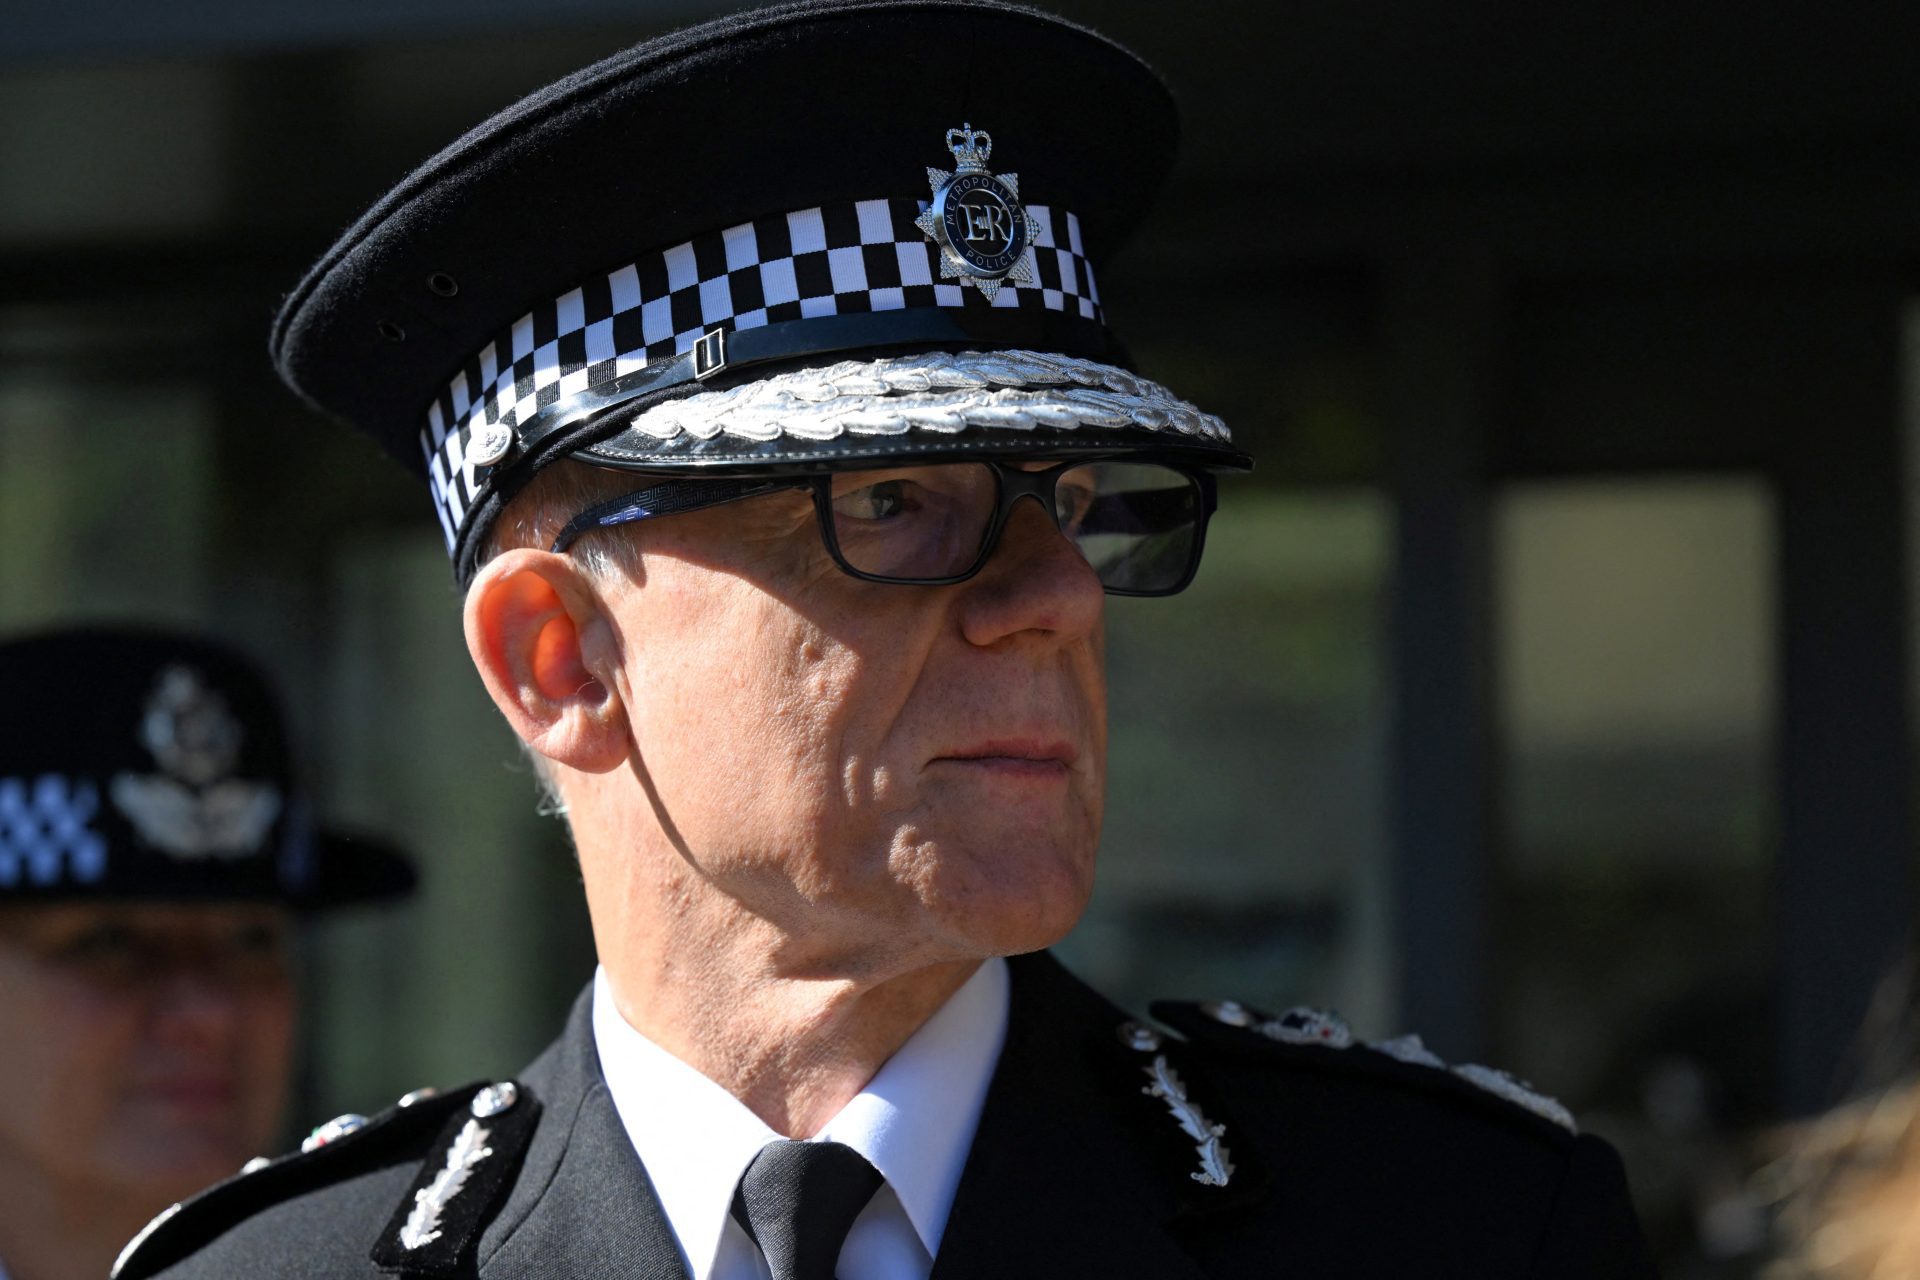 Mark Rowley, chef de la police de Londres, défend les pro-Palestine